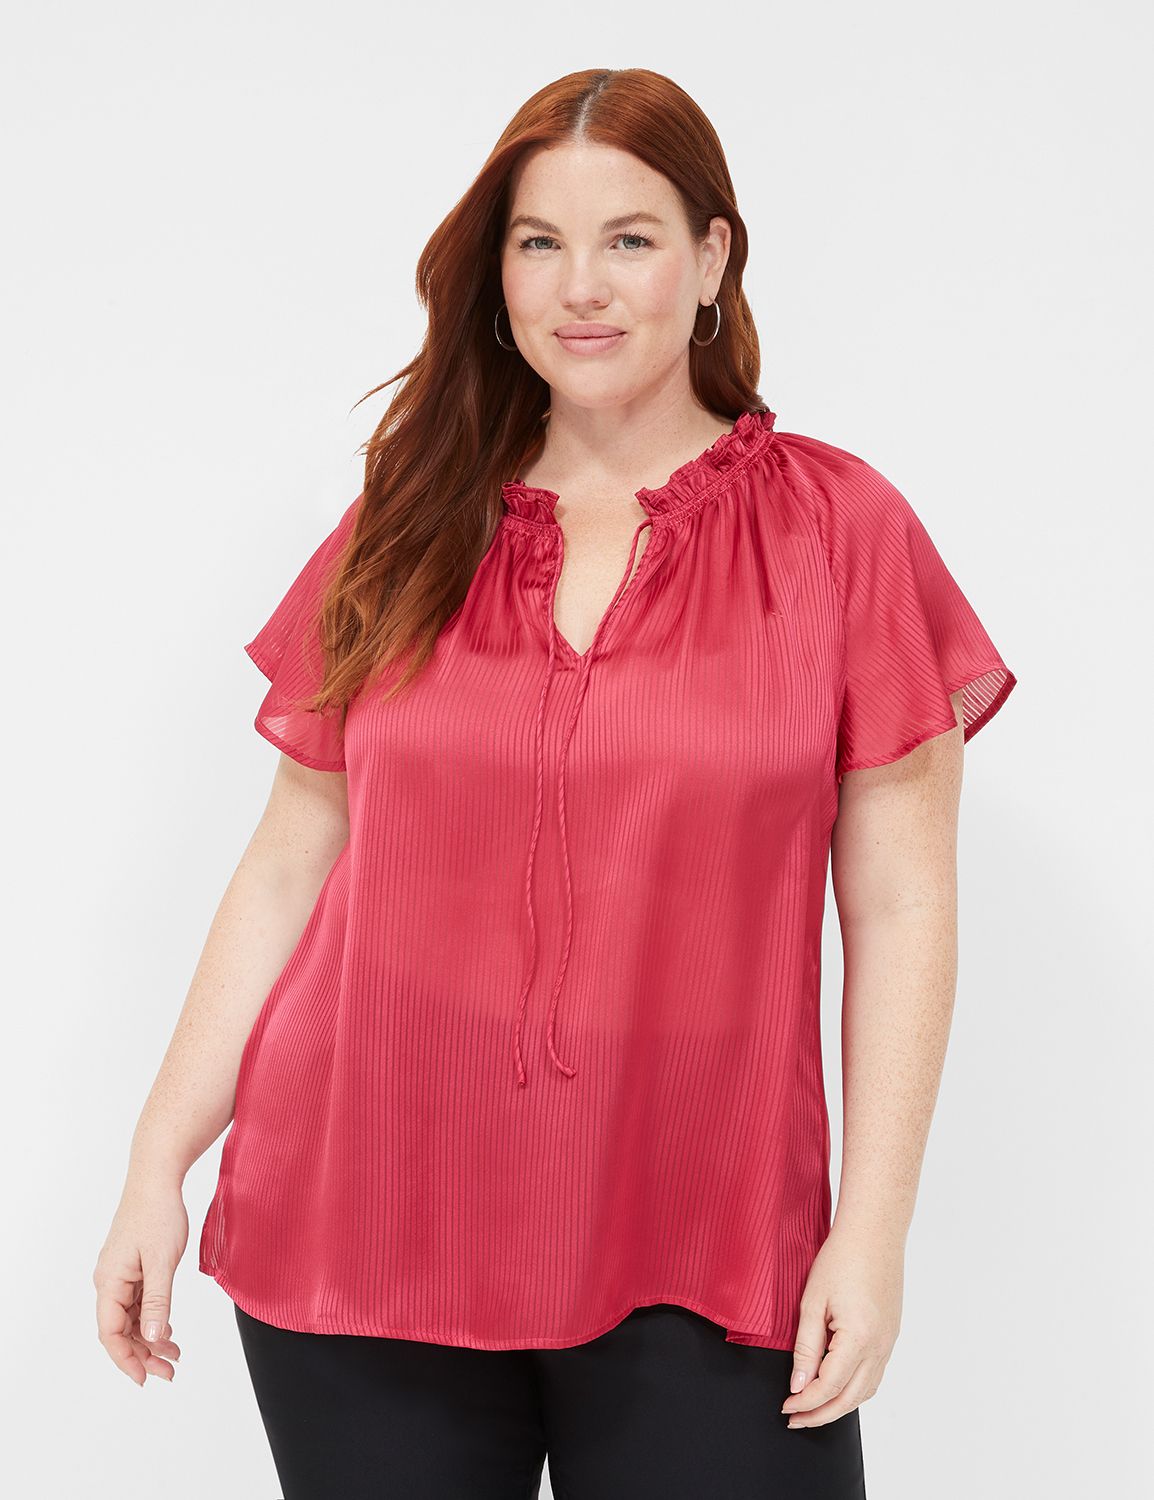 plus size ladies clothing - - Lane Bryant PINK Dip-Dye Cold Shoulder Swing  Top - Plus Size 18/20 to 30/32 (US